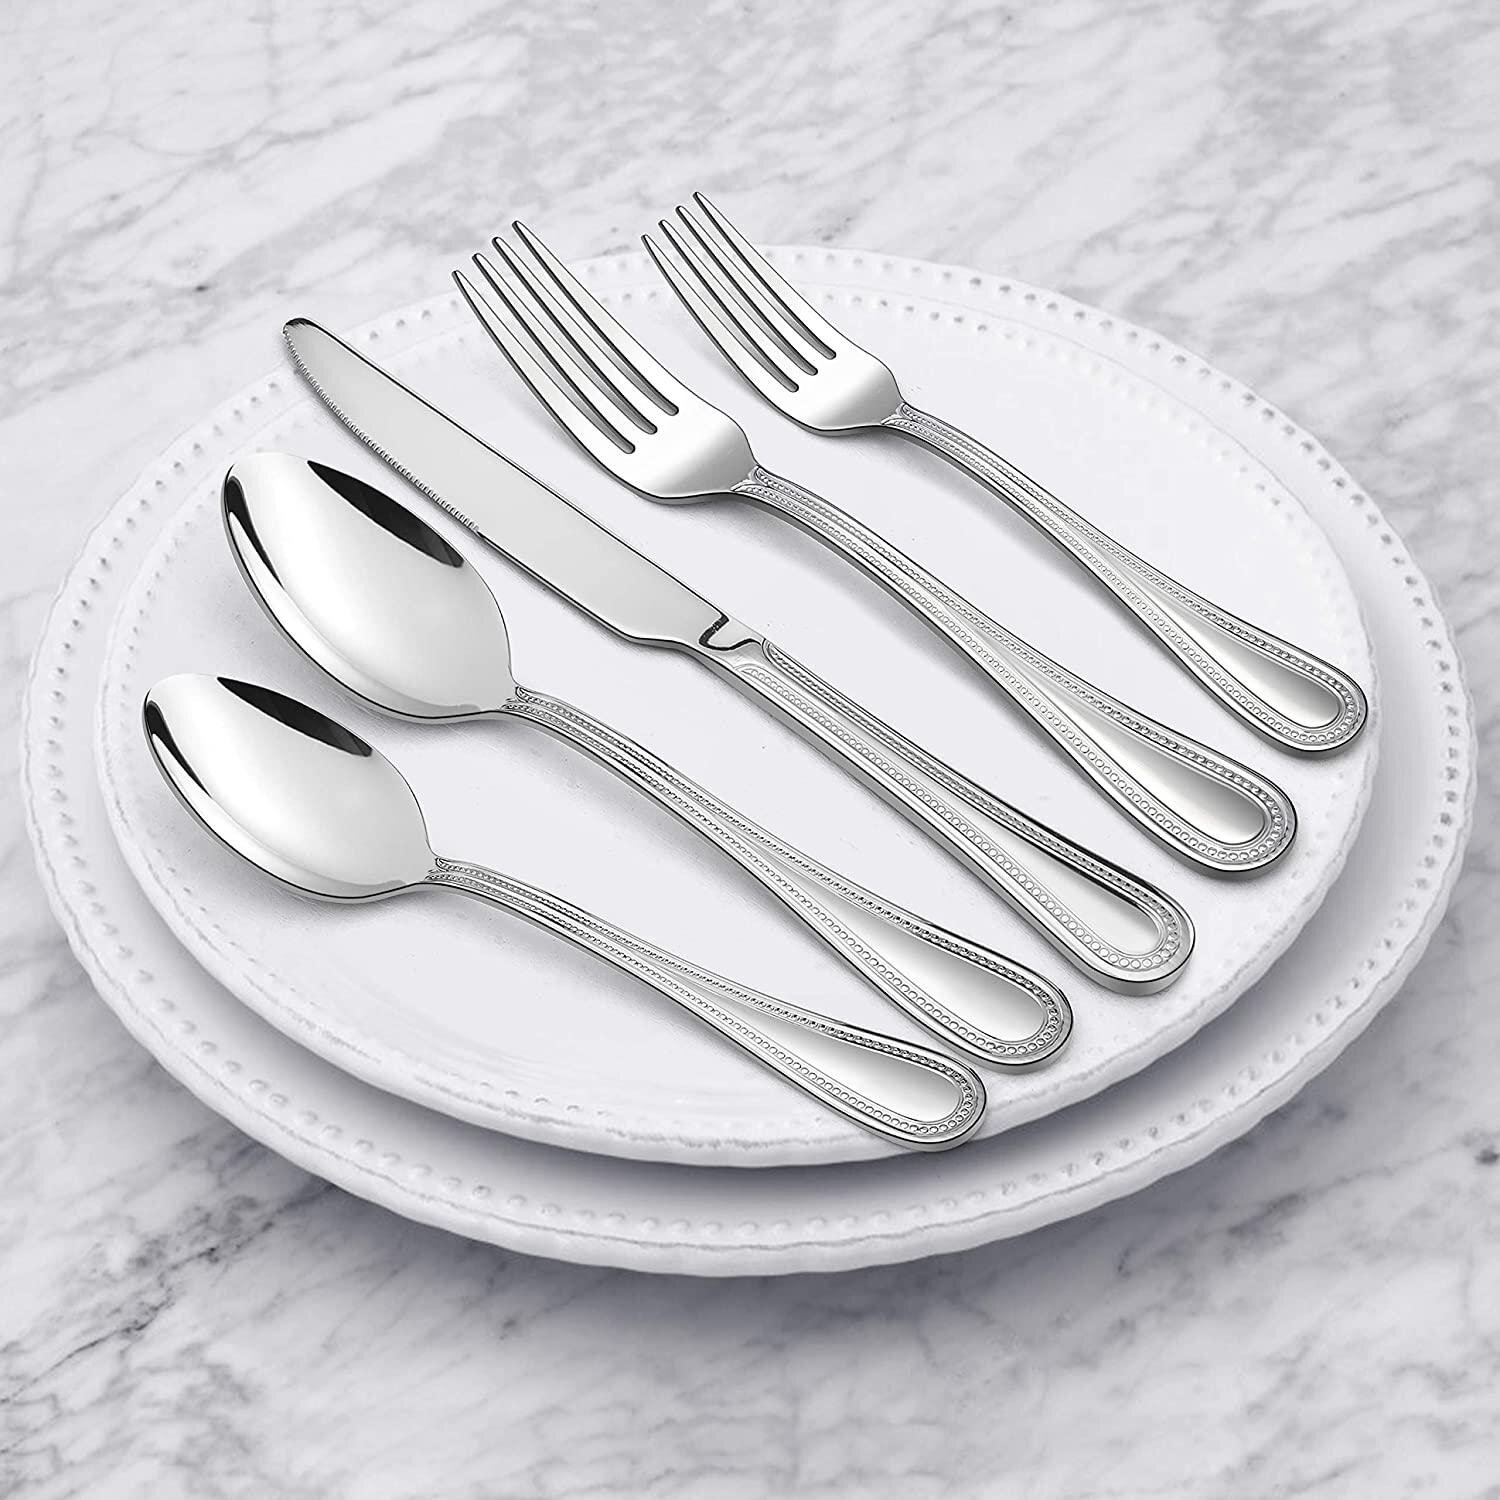 Bead Dessert Forks x 12  Mirror Finish 18/0 Stainless Steel Cutlery 